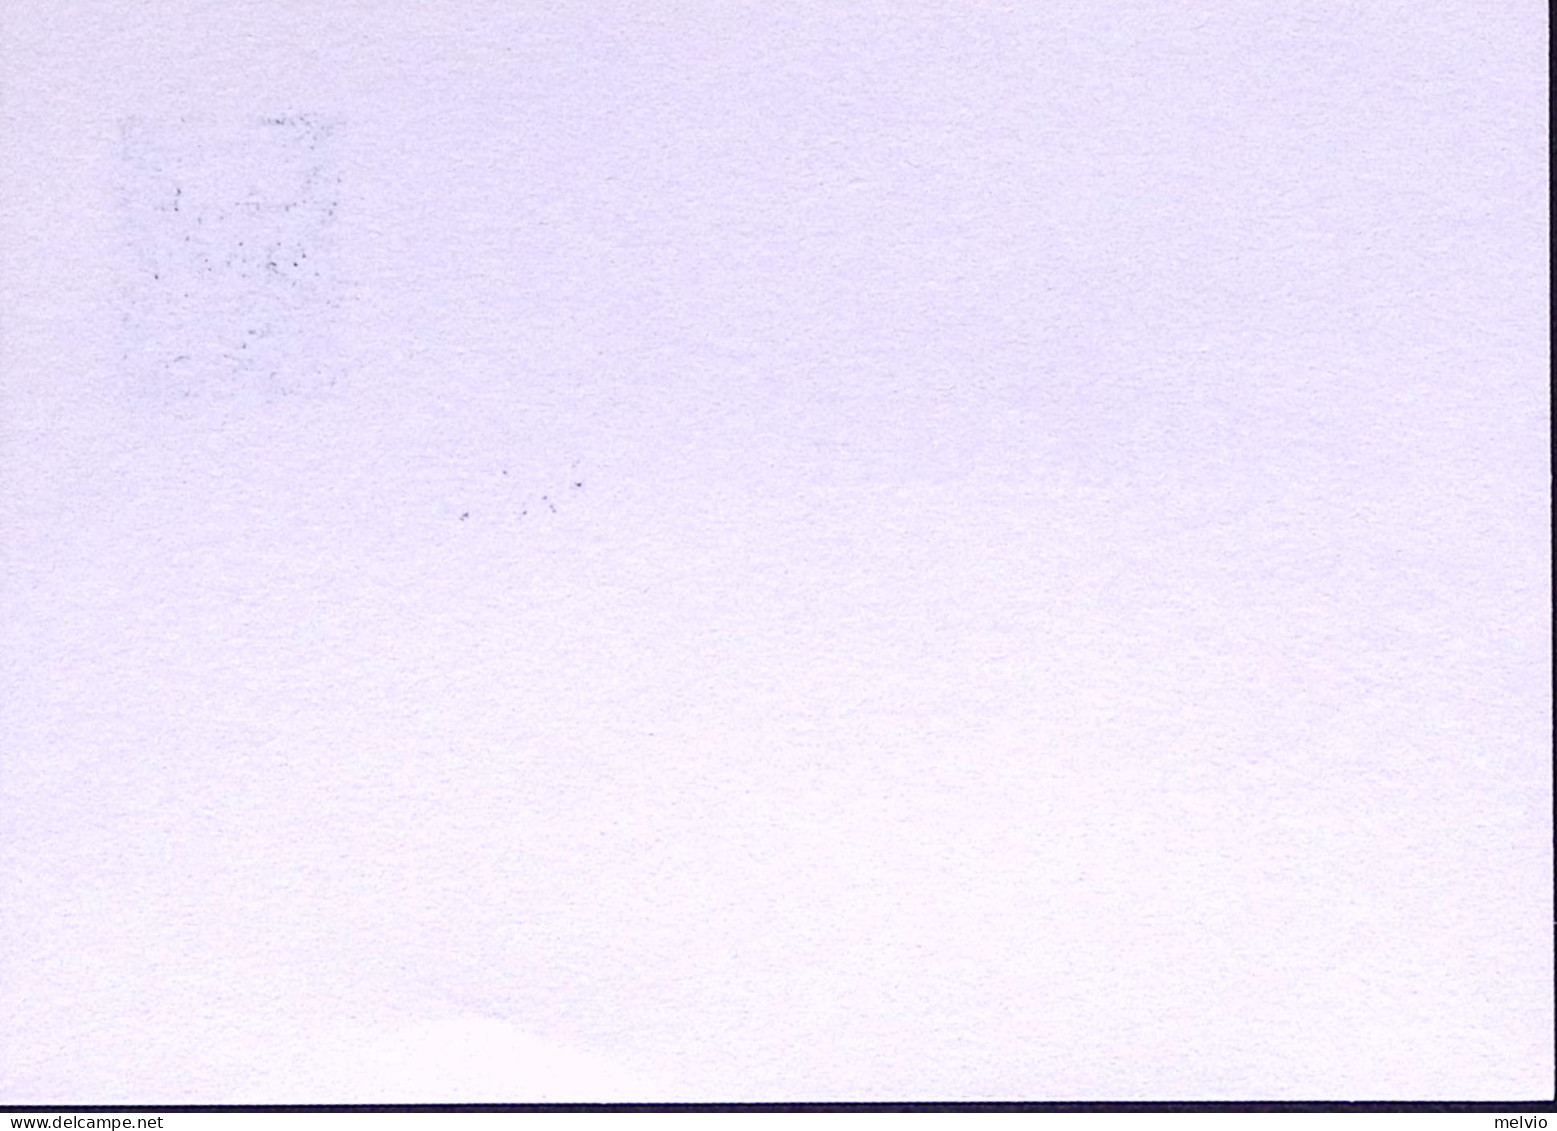 1994-VIAREGGIO CARNEVALE Cartolina Postale Lire 700 Soprastampata I.P.Z.S. Nuova - Ganzsachen